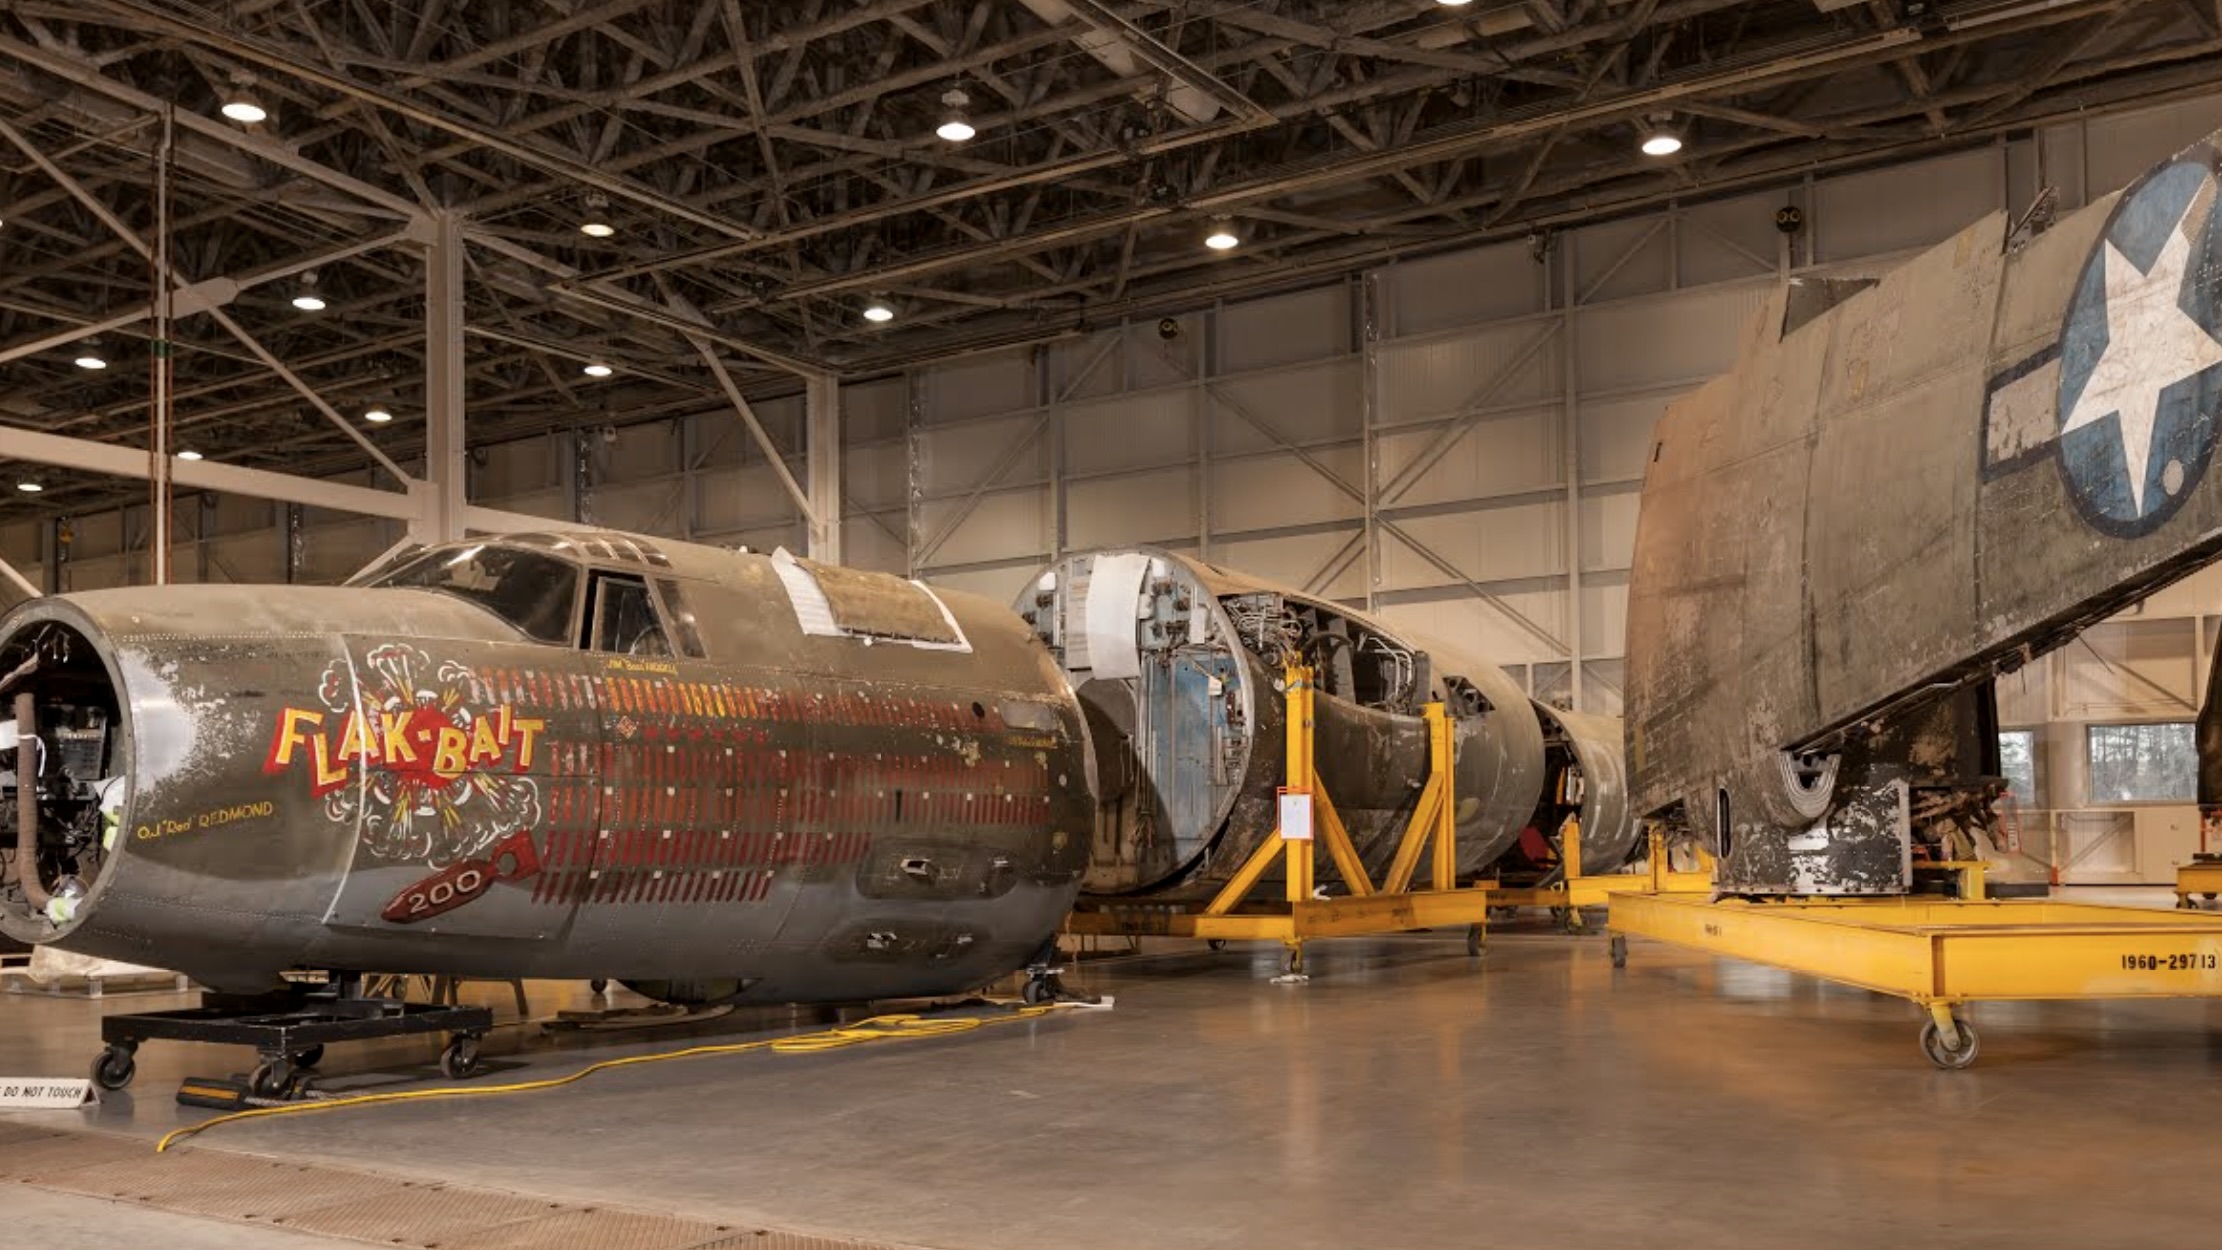 Flak-Bait’s major airframe components together after delivery to the Mary Baker Engen Restoration Hangar of the Steven F. Udvar Hazy Center in 2015